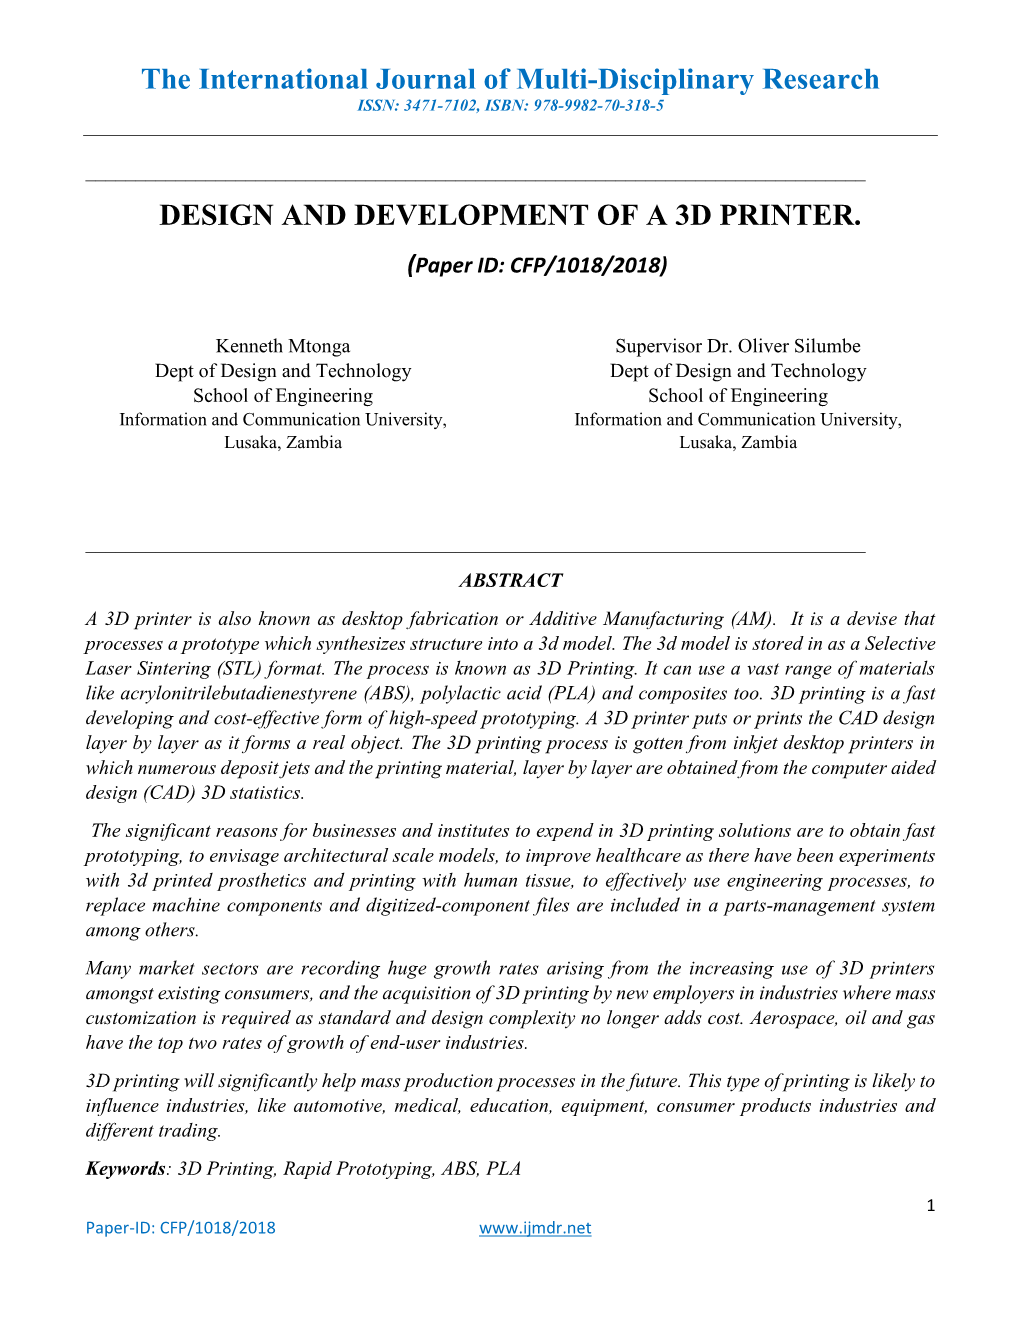 Design and Development of a 3D Printer